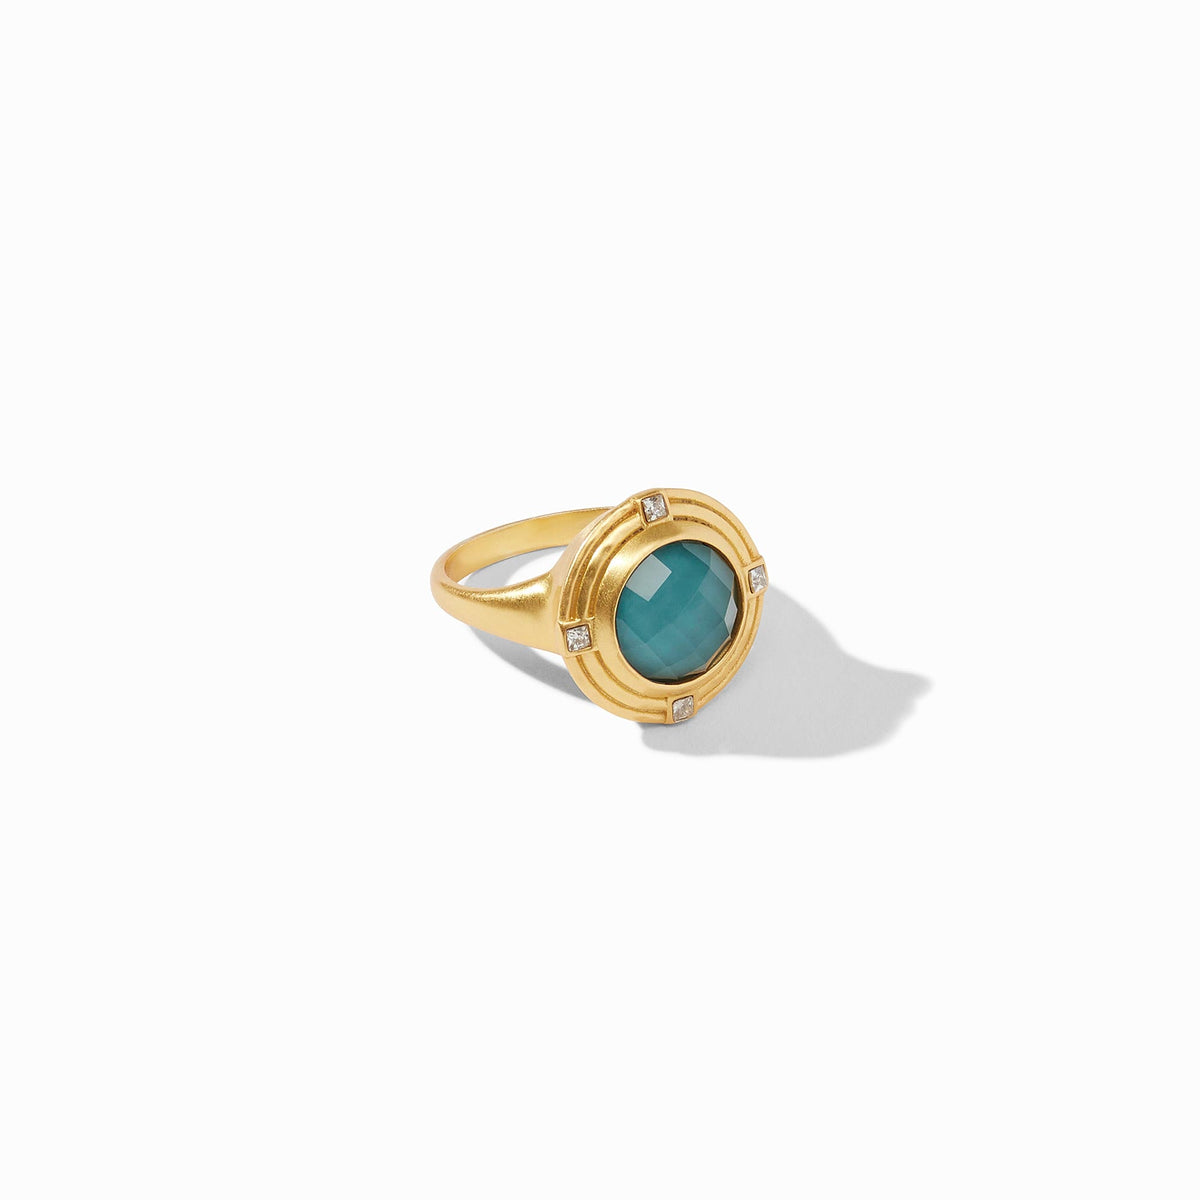 Julie Vos - Astor Ring, Iridescent Peacock Blue / 8